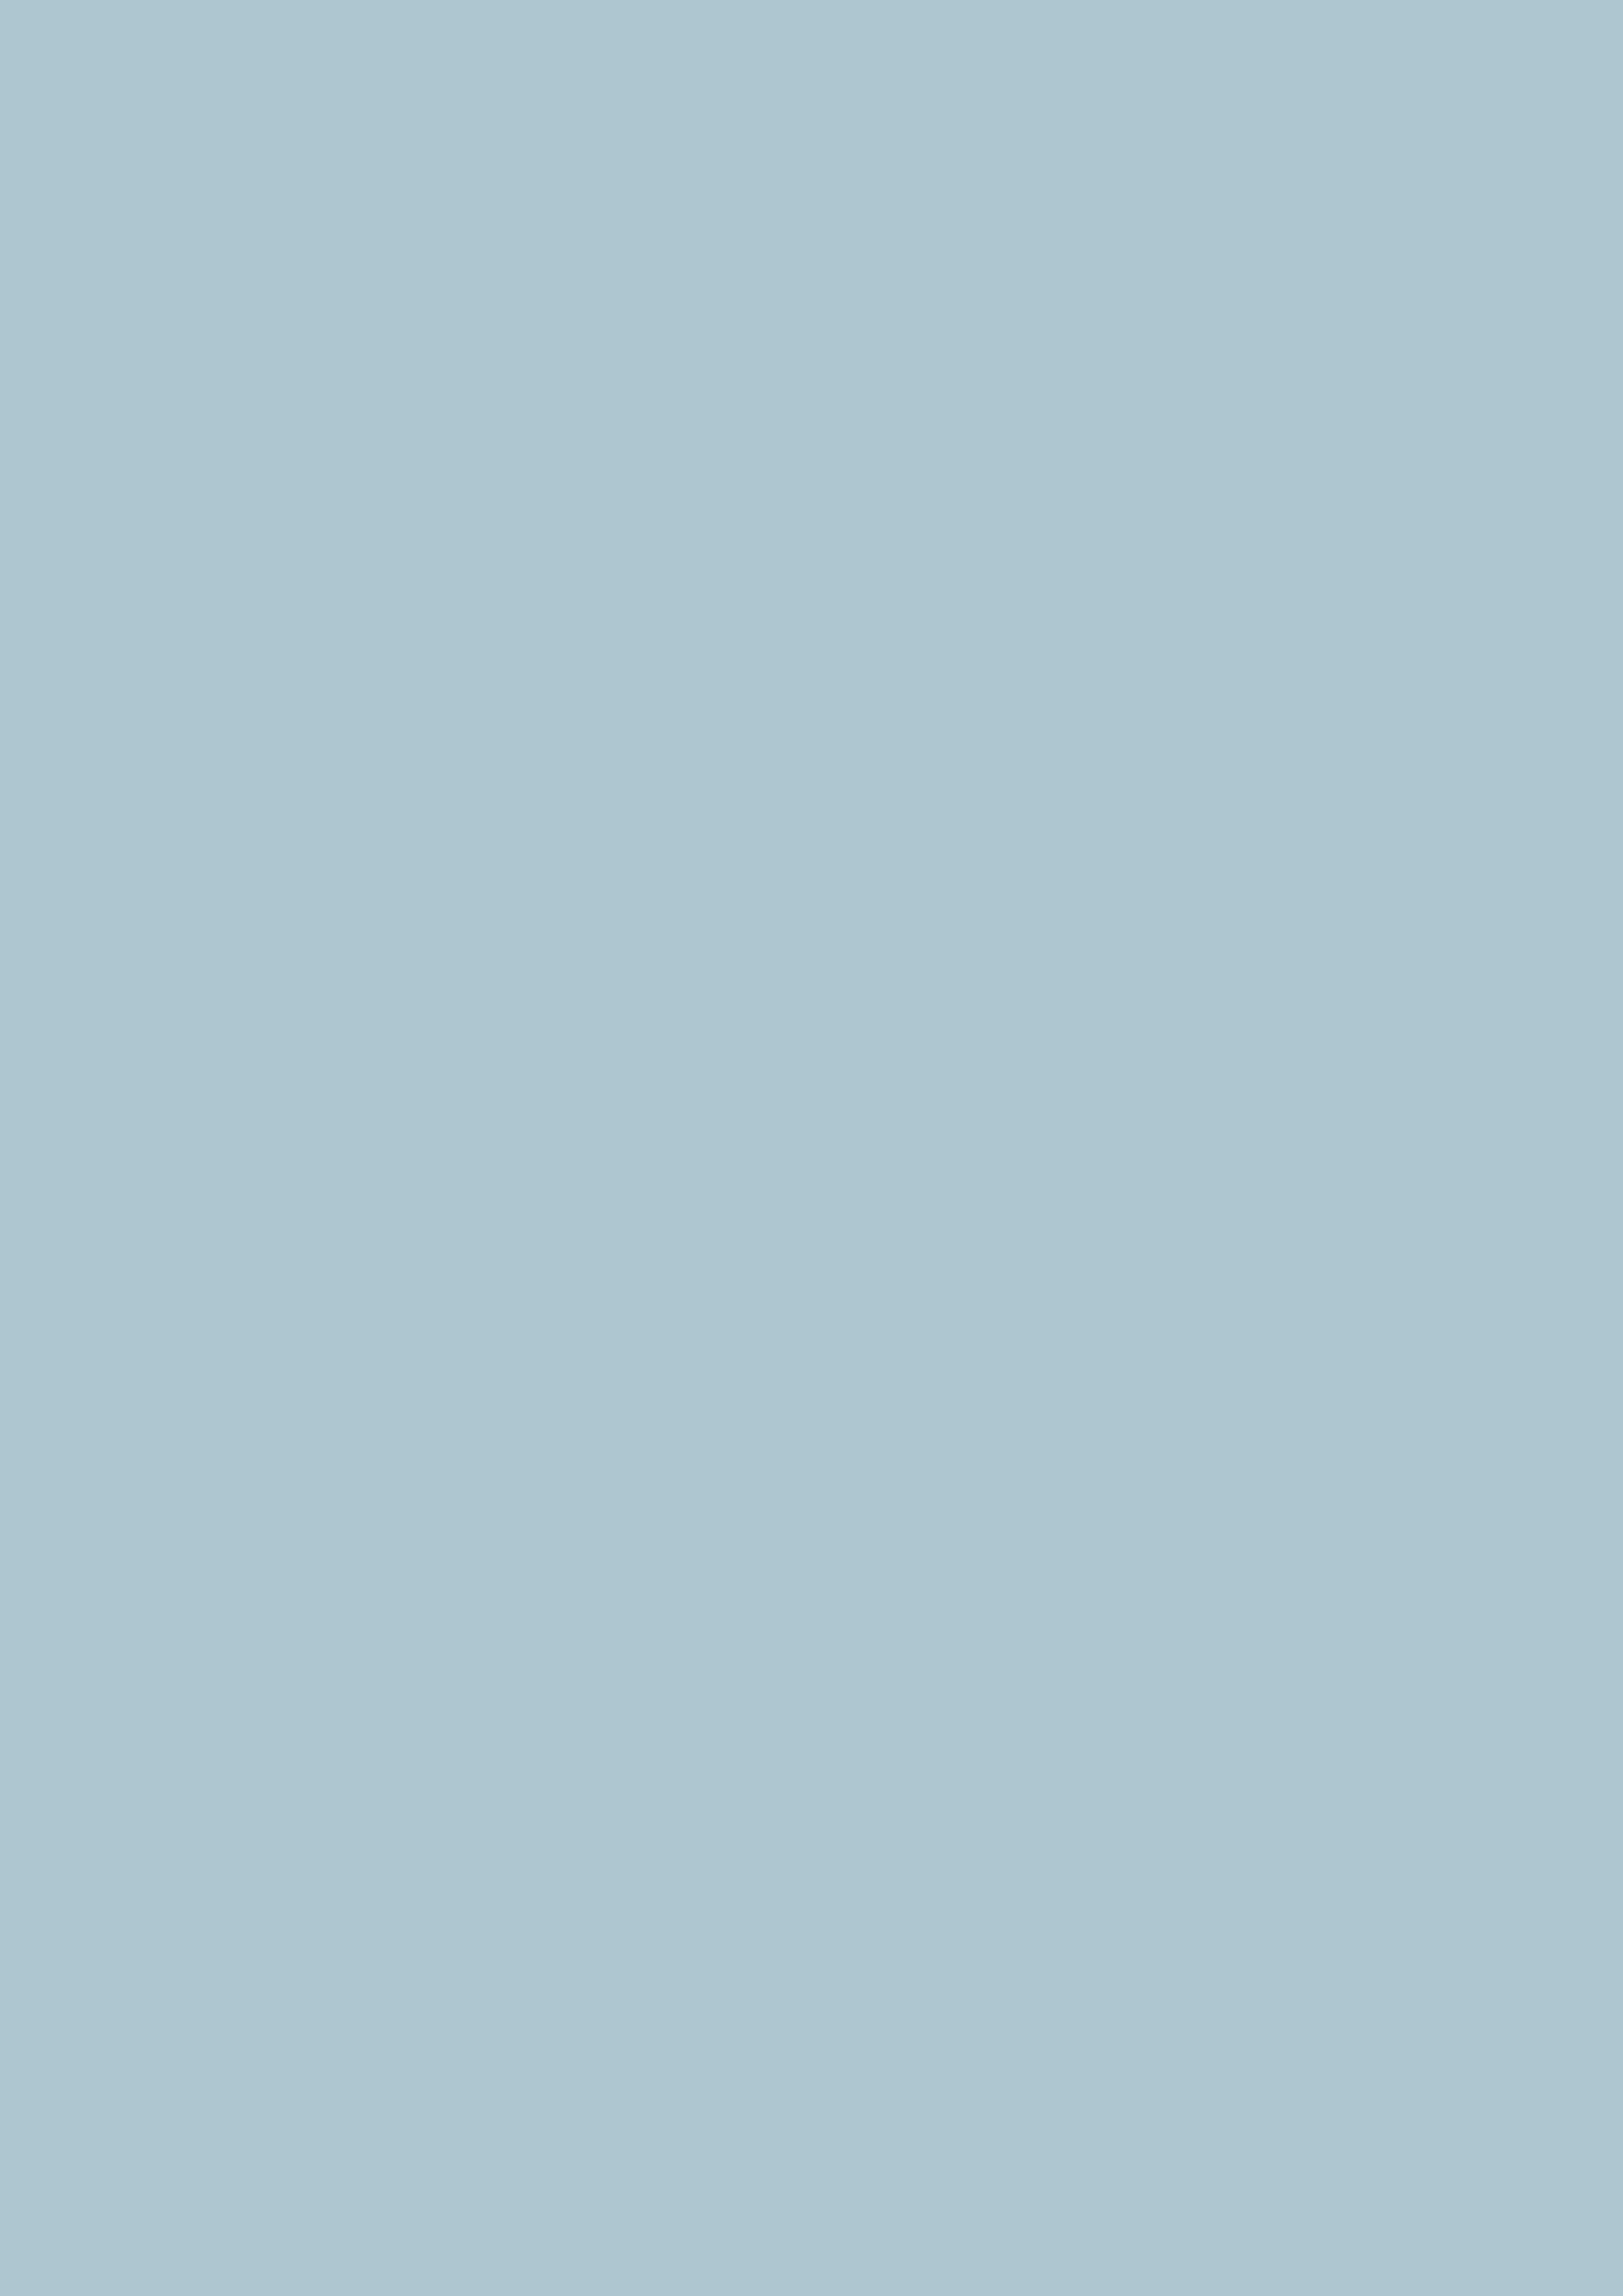 2480x3508 Pastel Blue Solid Color Background